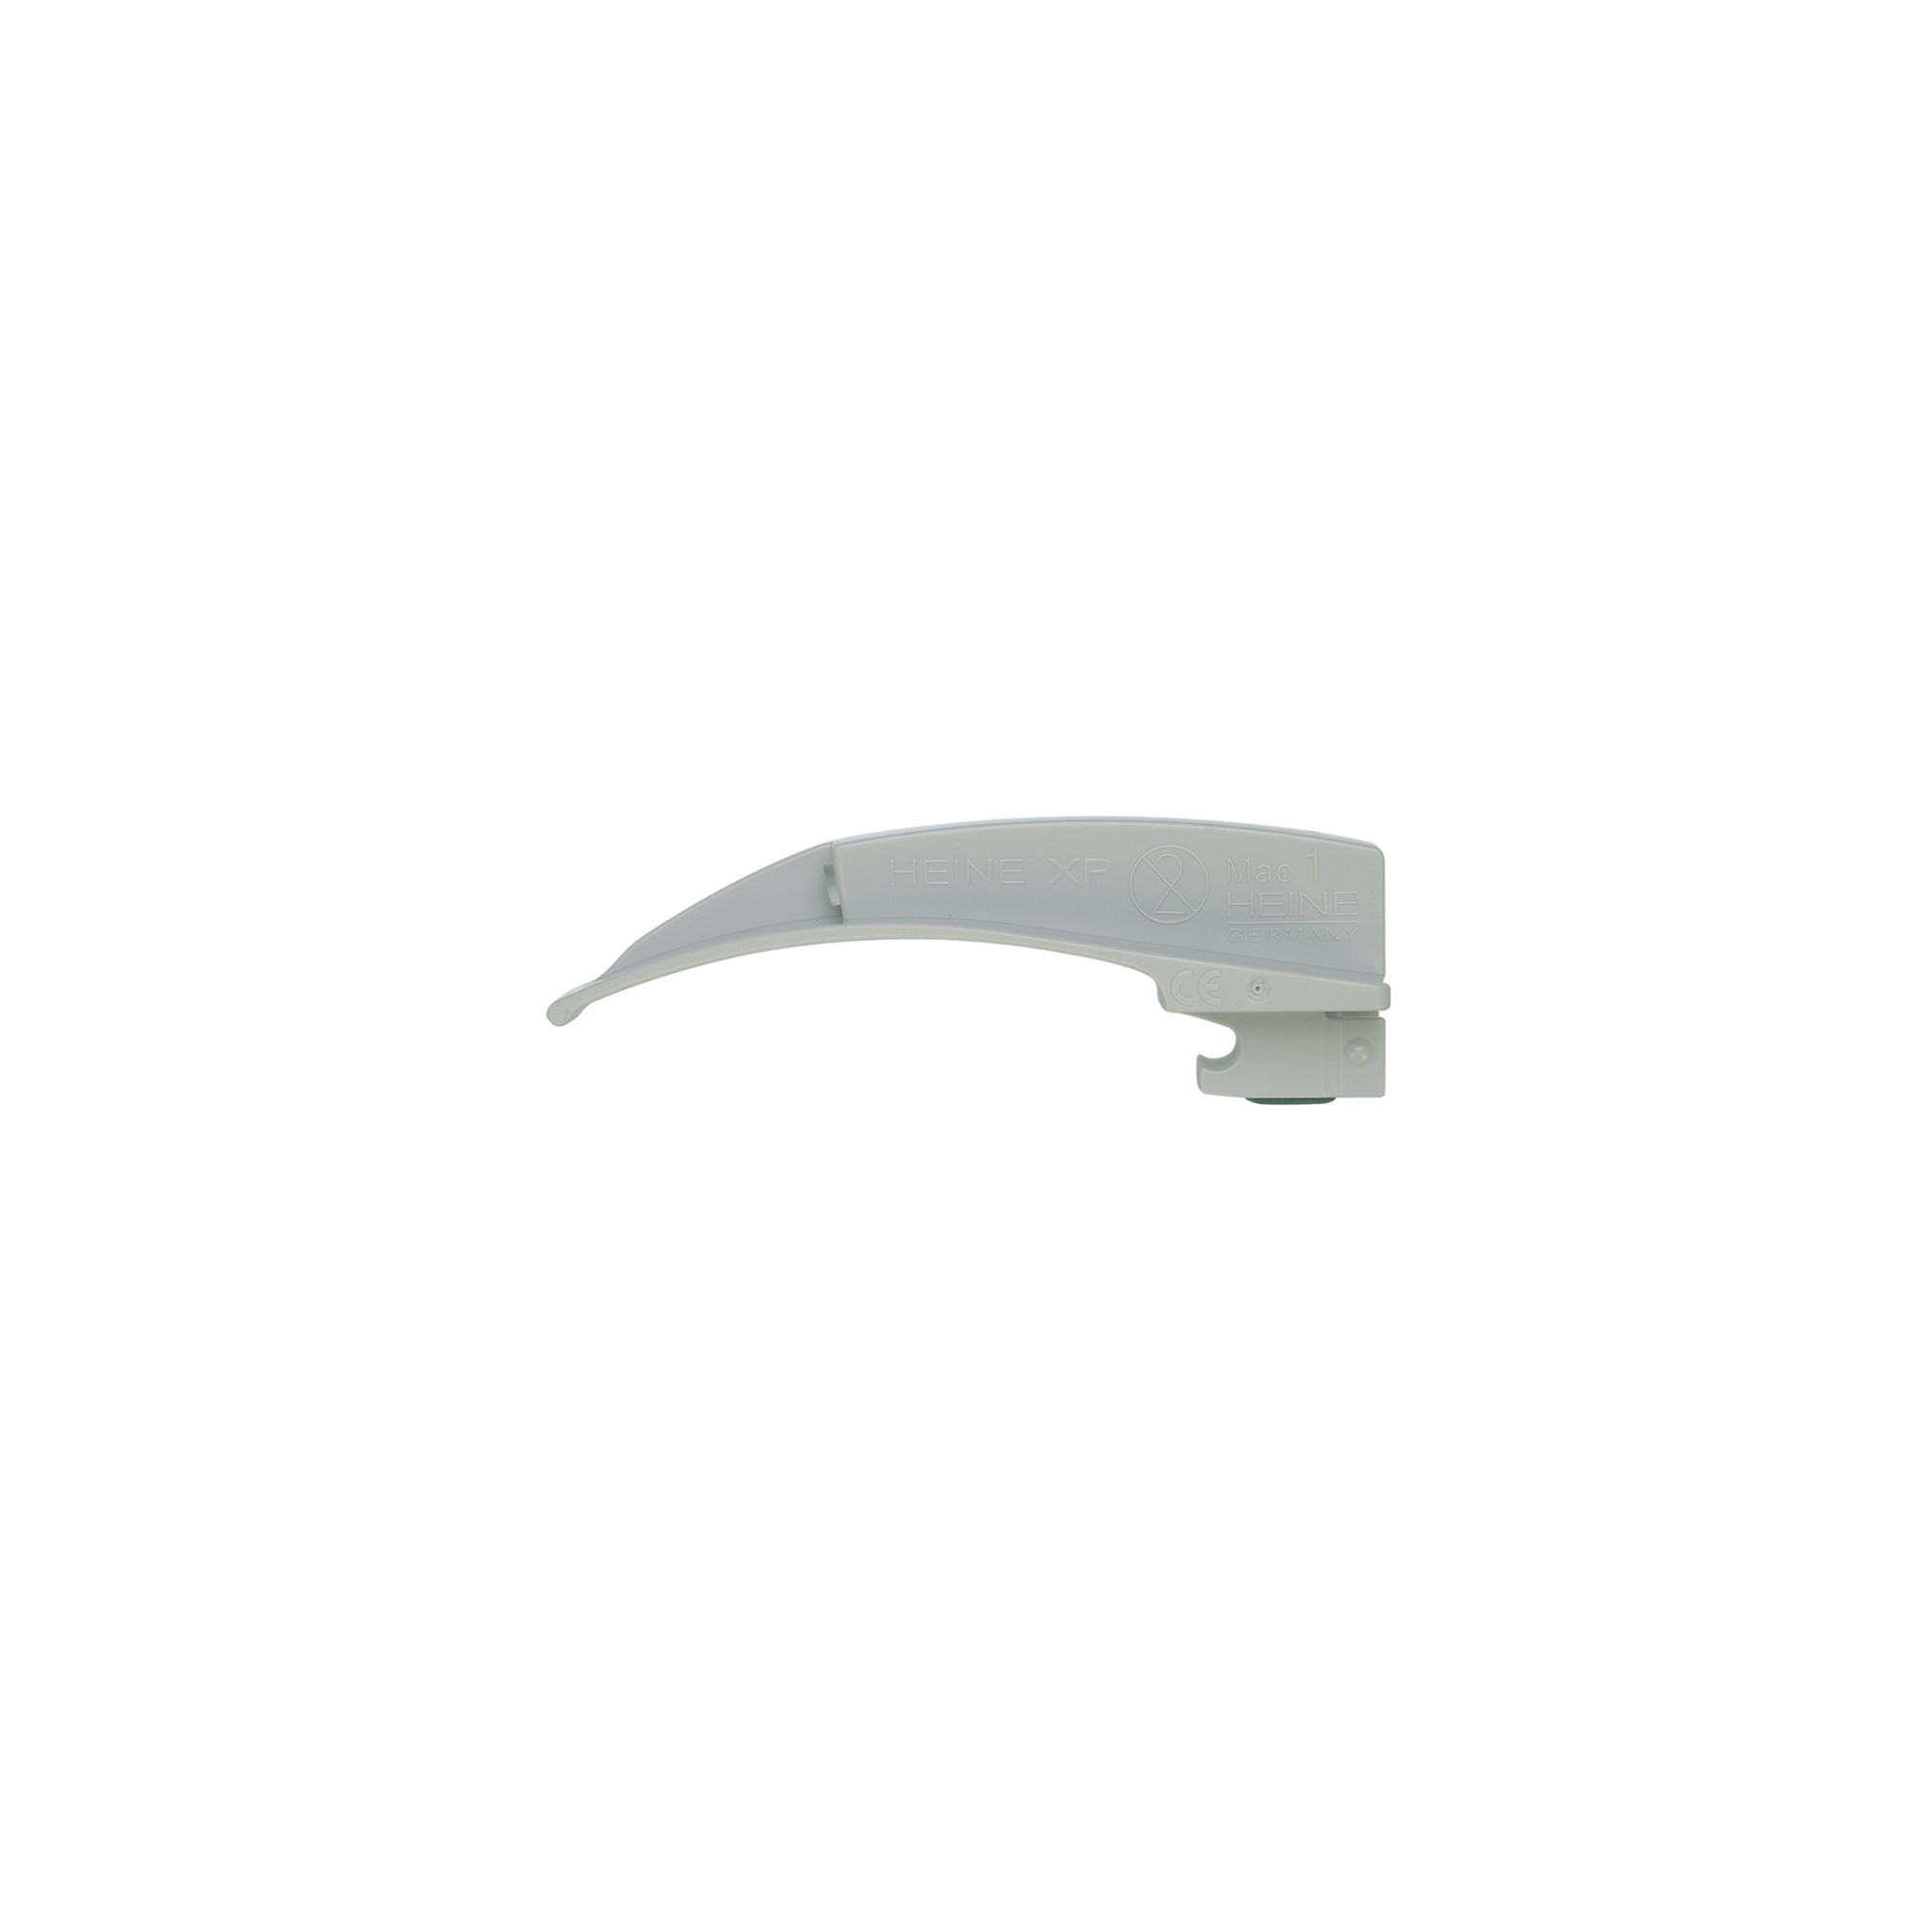 HEINE XP Disposable Laryngoscope Blades Macintosh